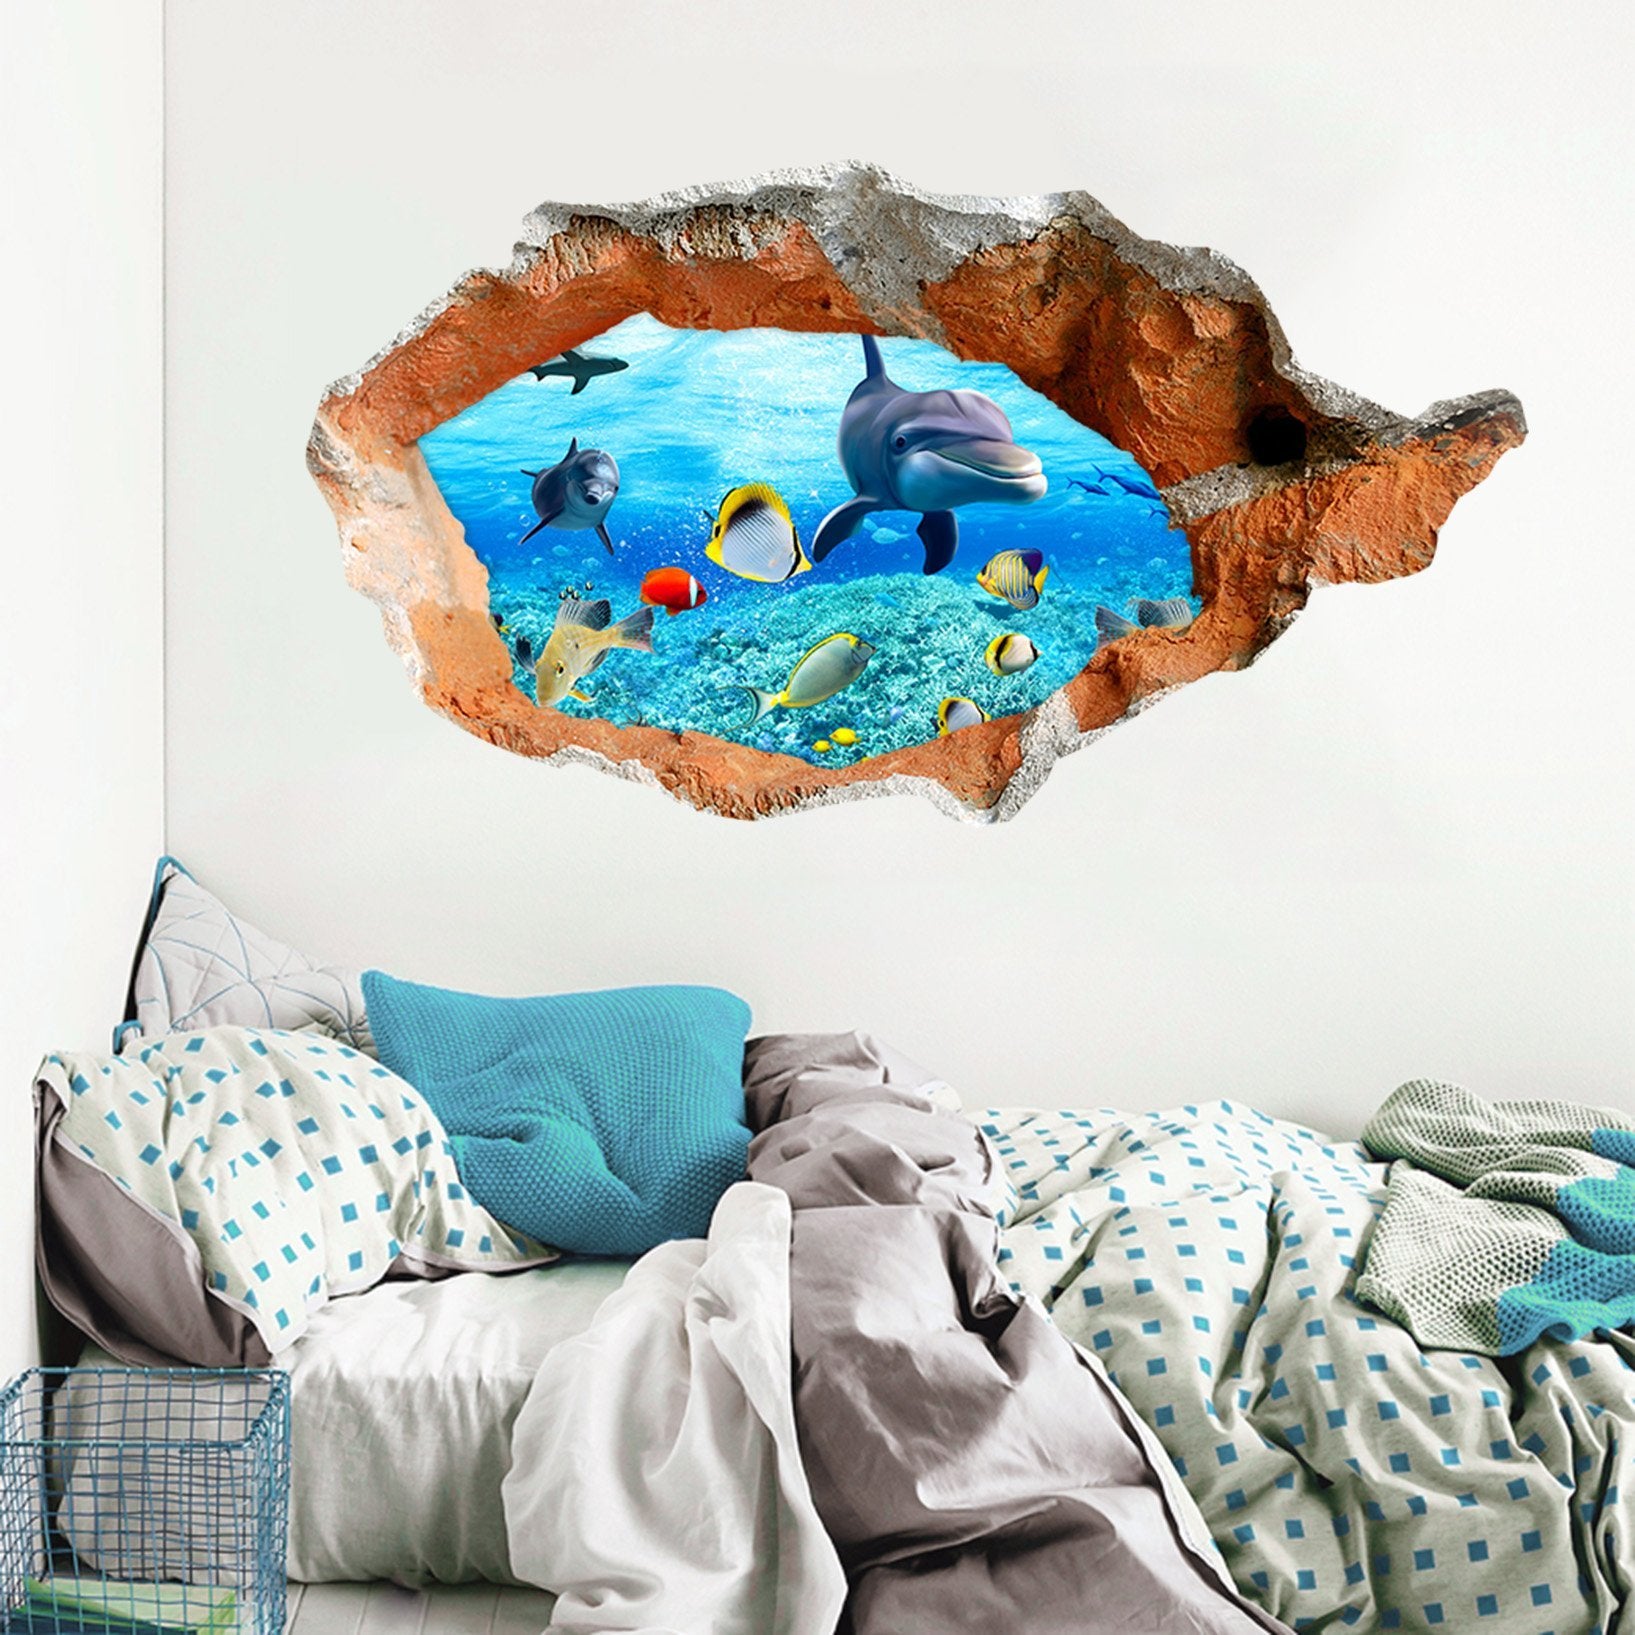 3D Ocean World 082 Broken Wall Murals Wallpaper AJ Wallpaper 